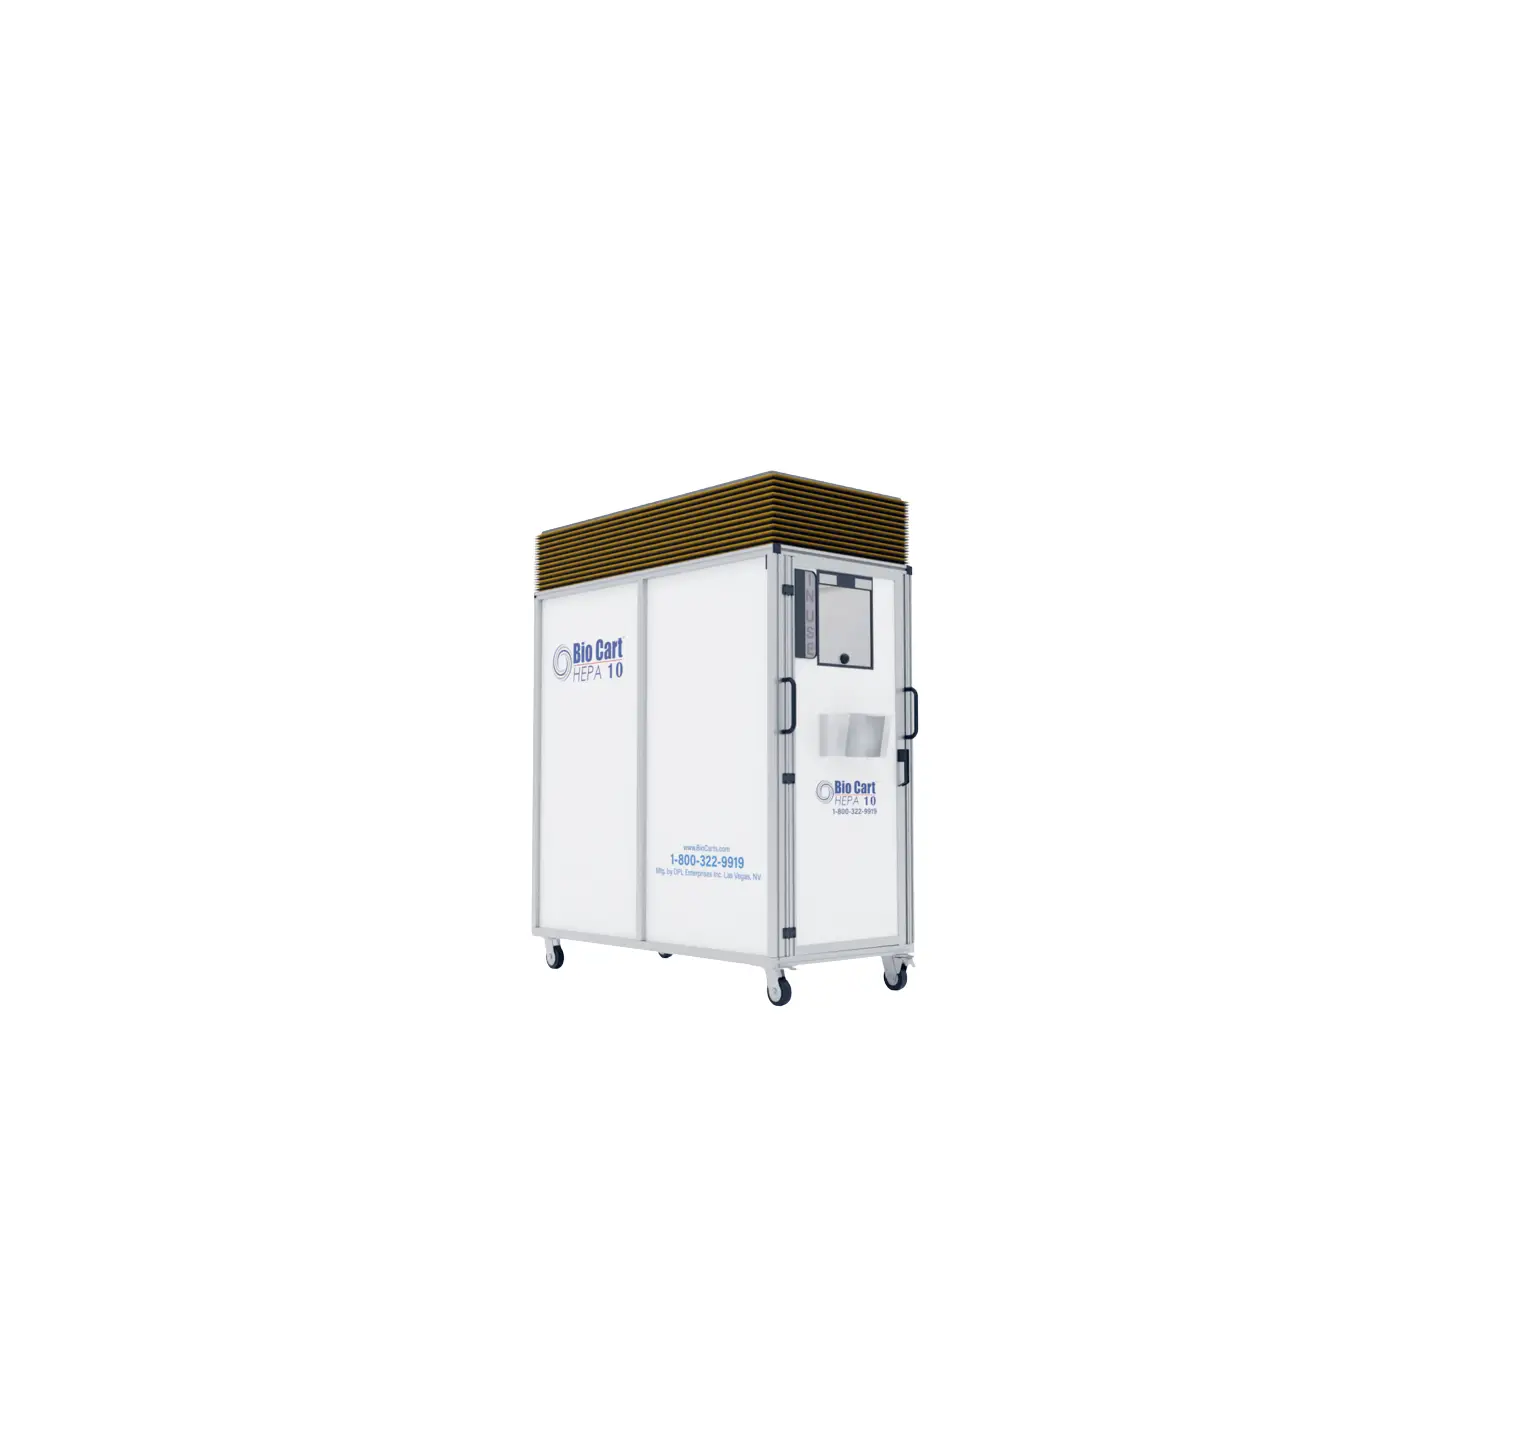 Air-Care FG0185 Cart 10 Containment Cart